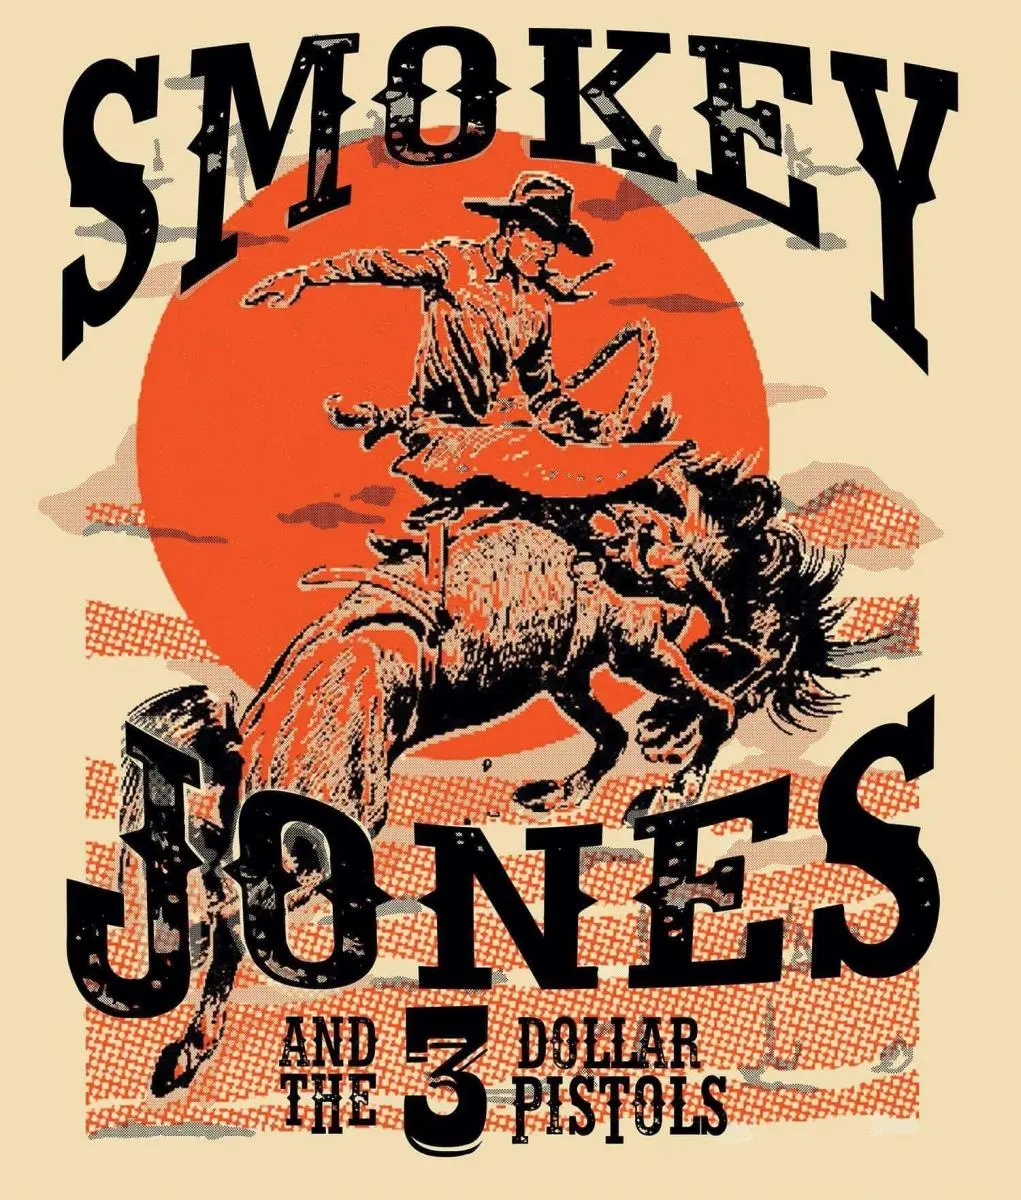 Smokey Jones and The 3 Dollar Pistols